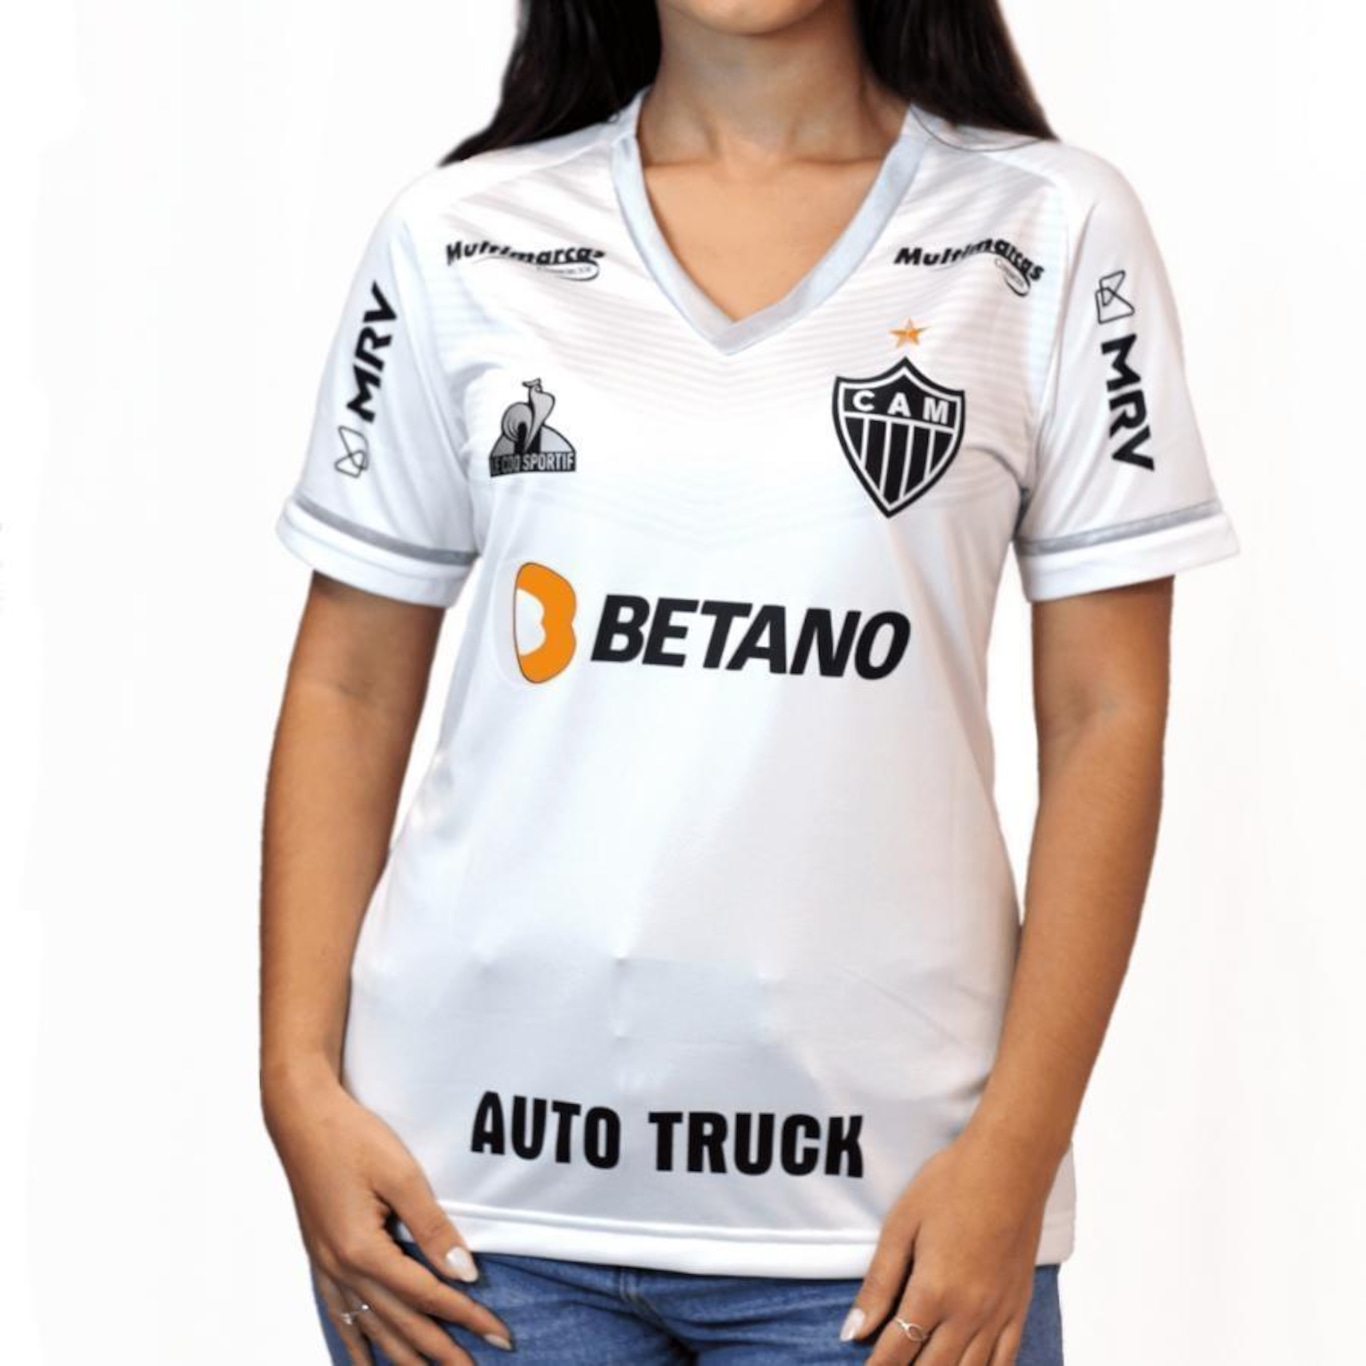 Camisa Masculina Atlético Mineiro 2021 - Jogo 2